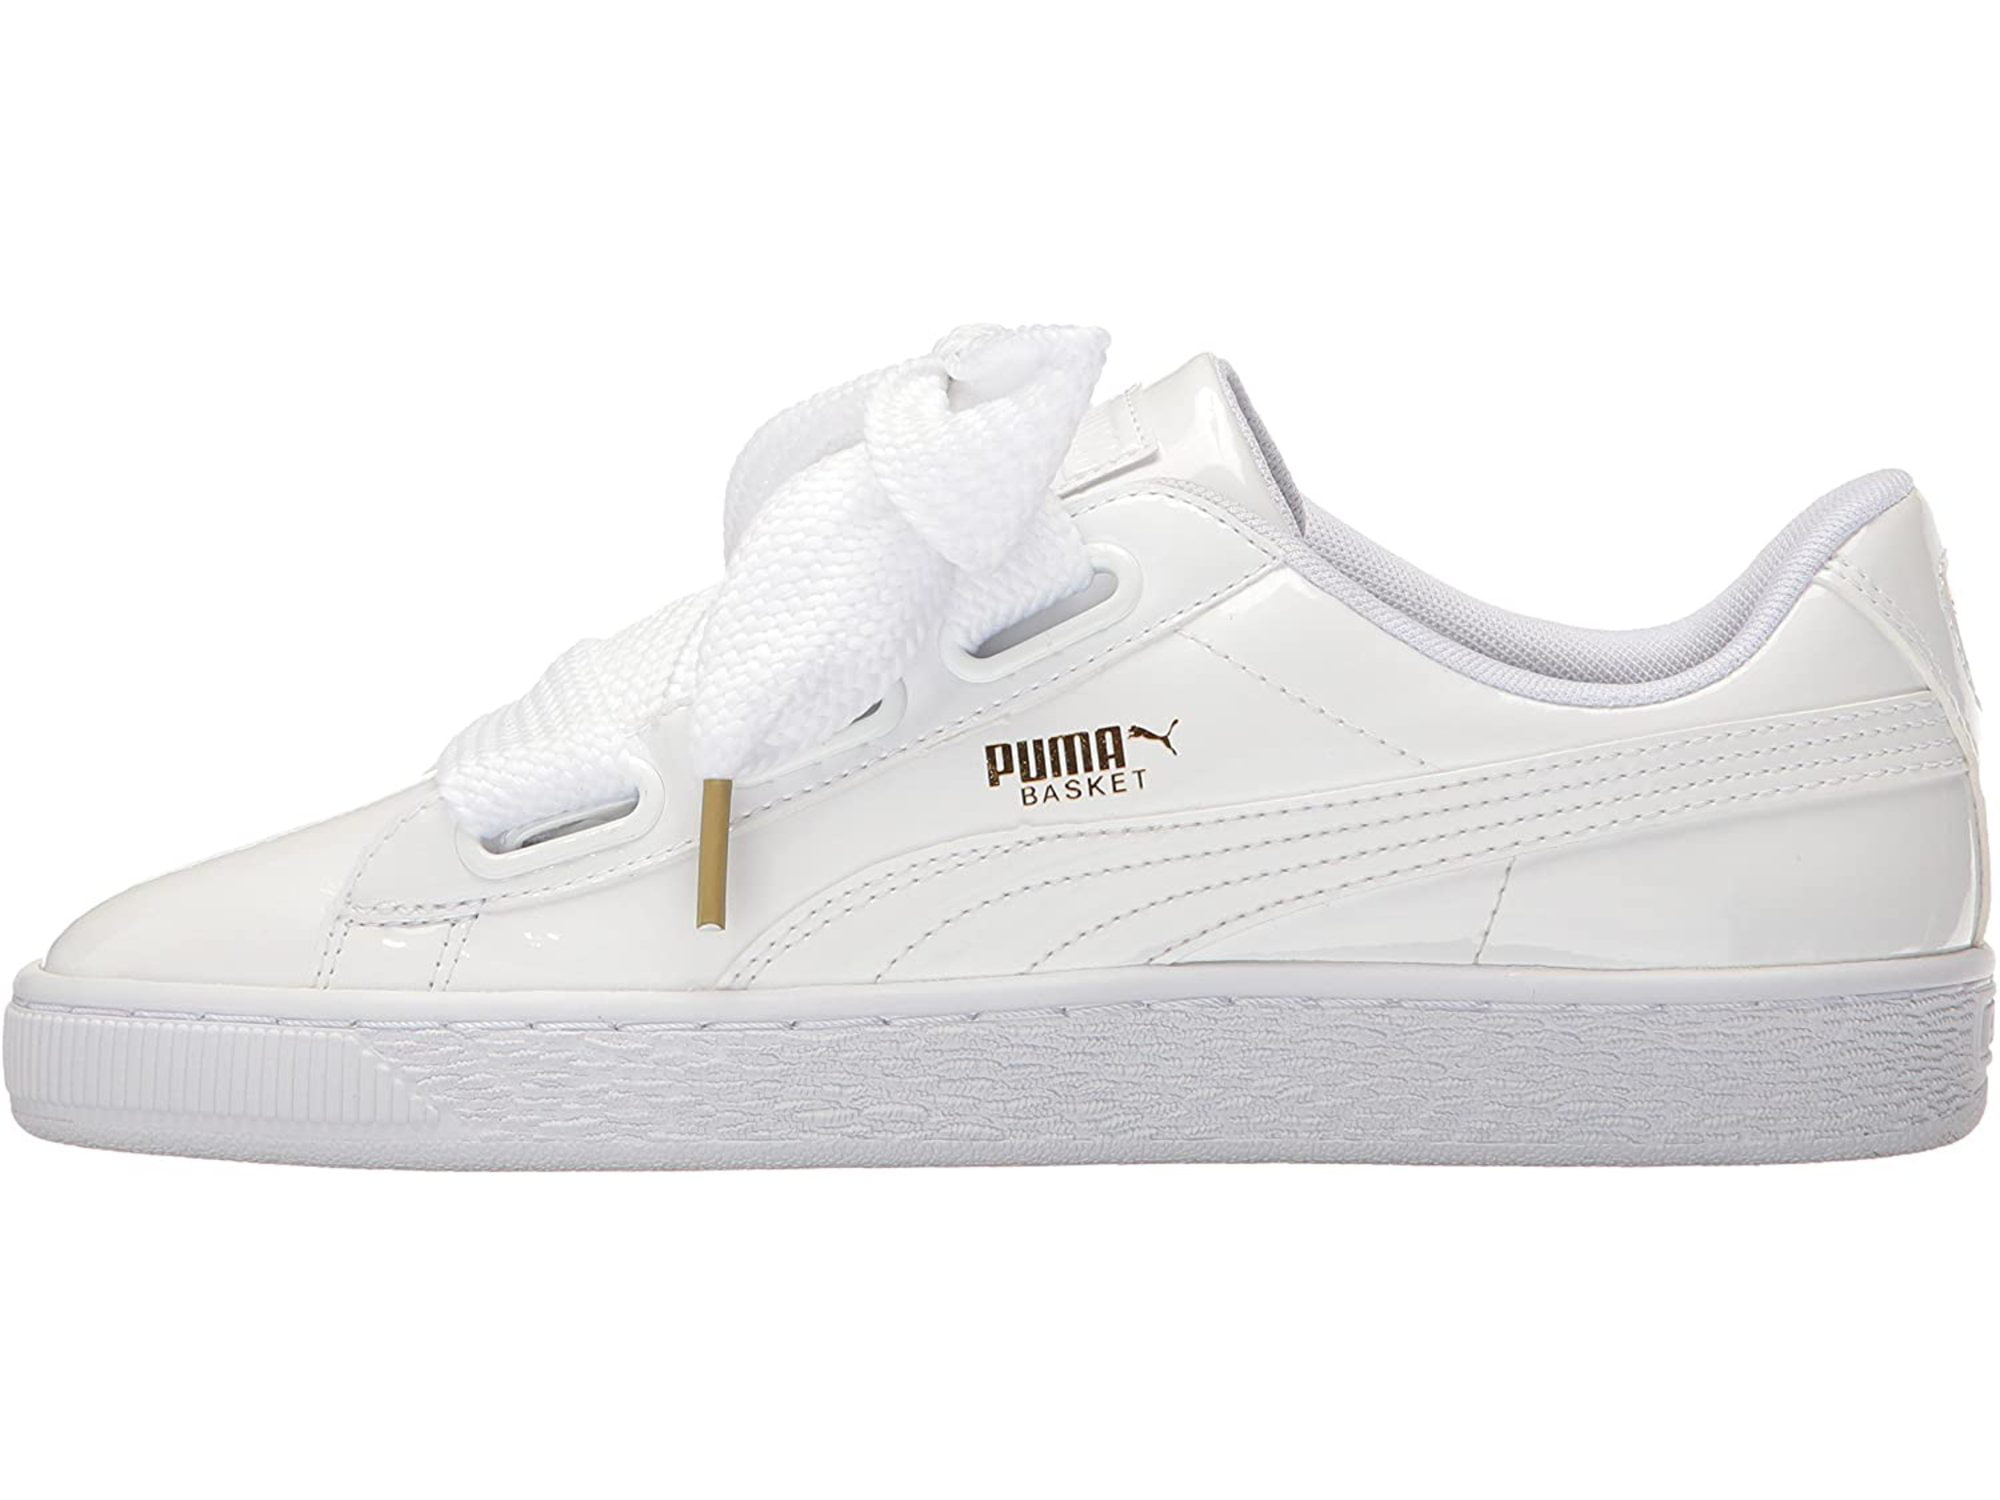 Puma Basket Heart Patent Women's Sneakers Puma White363073-02